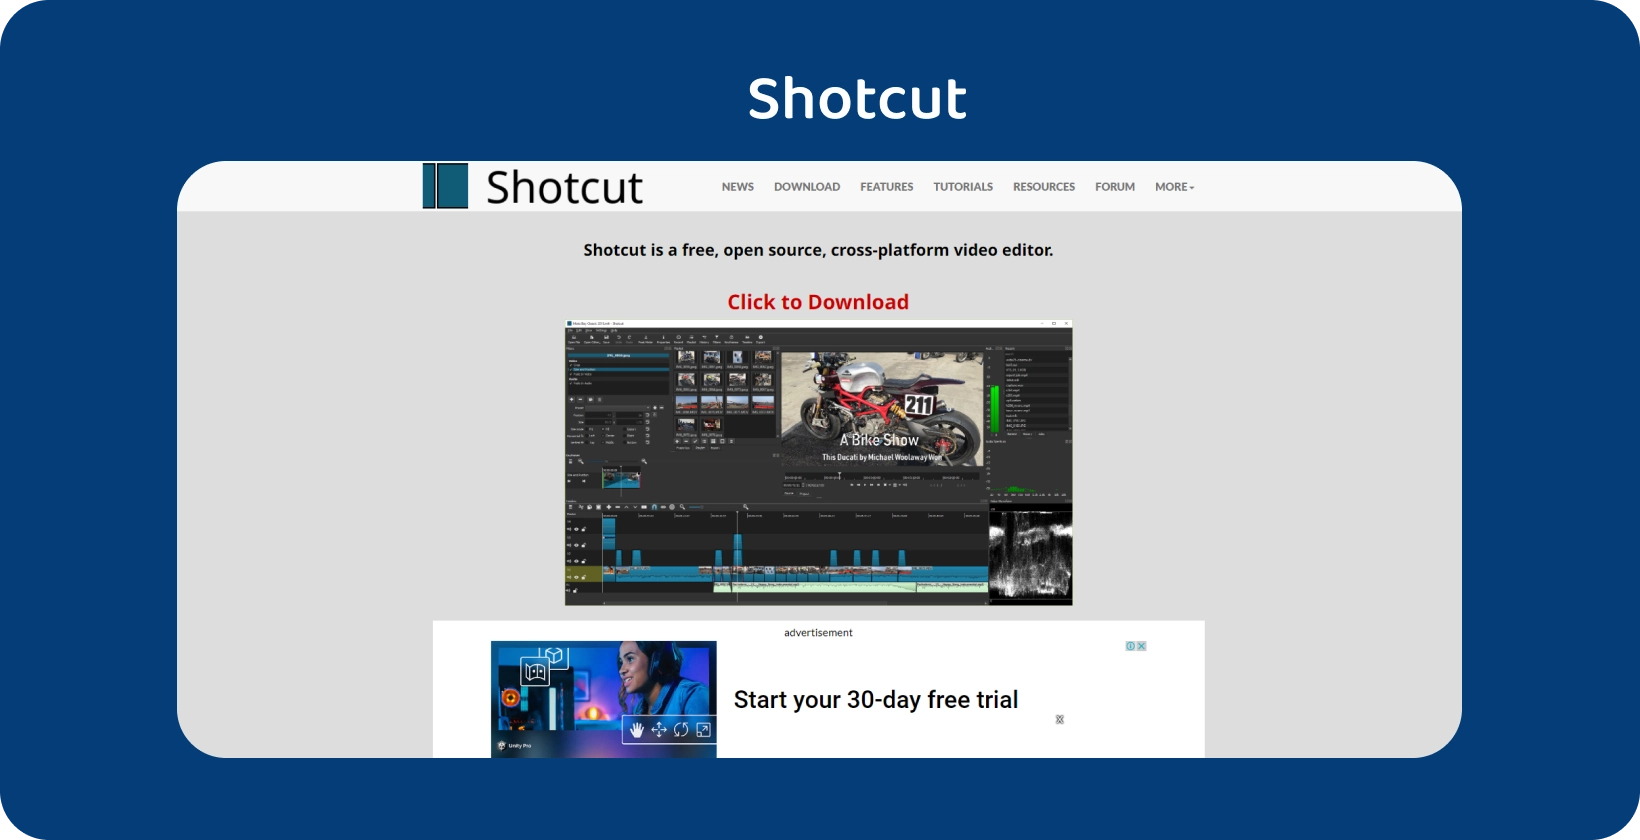 Shotcutエディタインターフェイス:堅牢な編集ツールが明確に表示された詳細なオートバイビデオタイムライン。